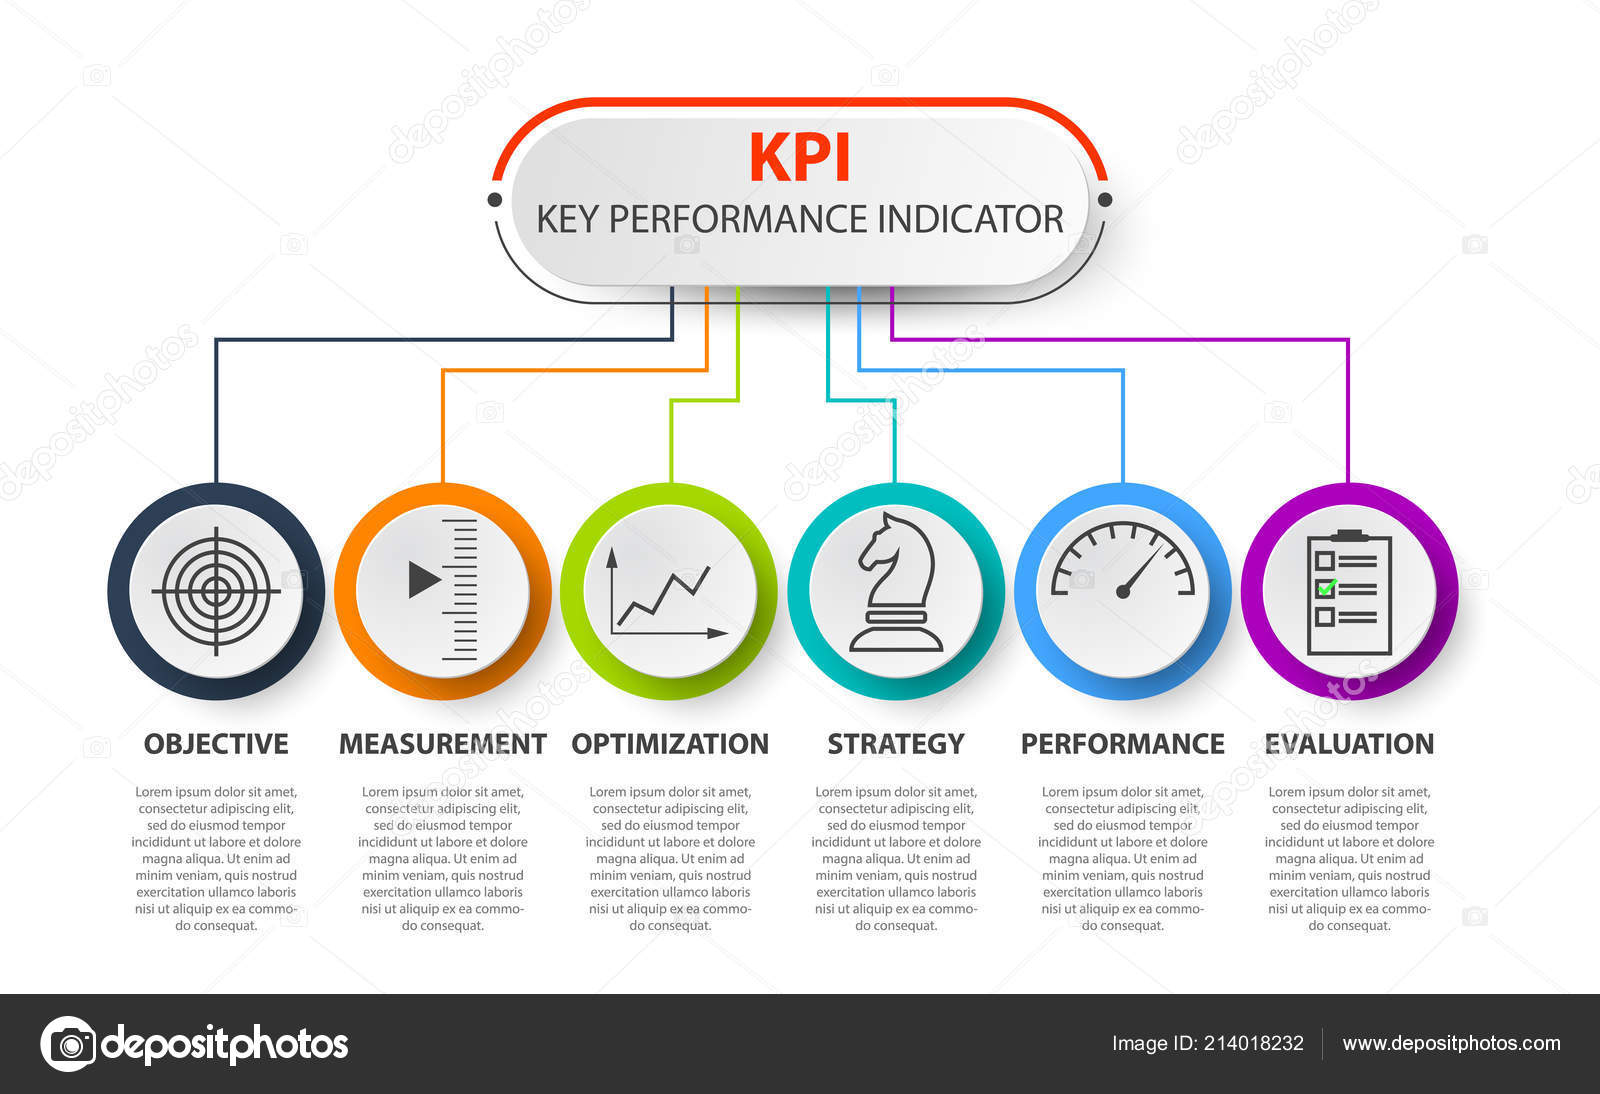 Kpi Key Performance Indicator Management Vector Image The Best Porn